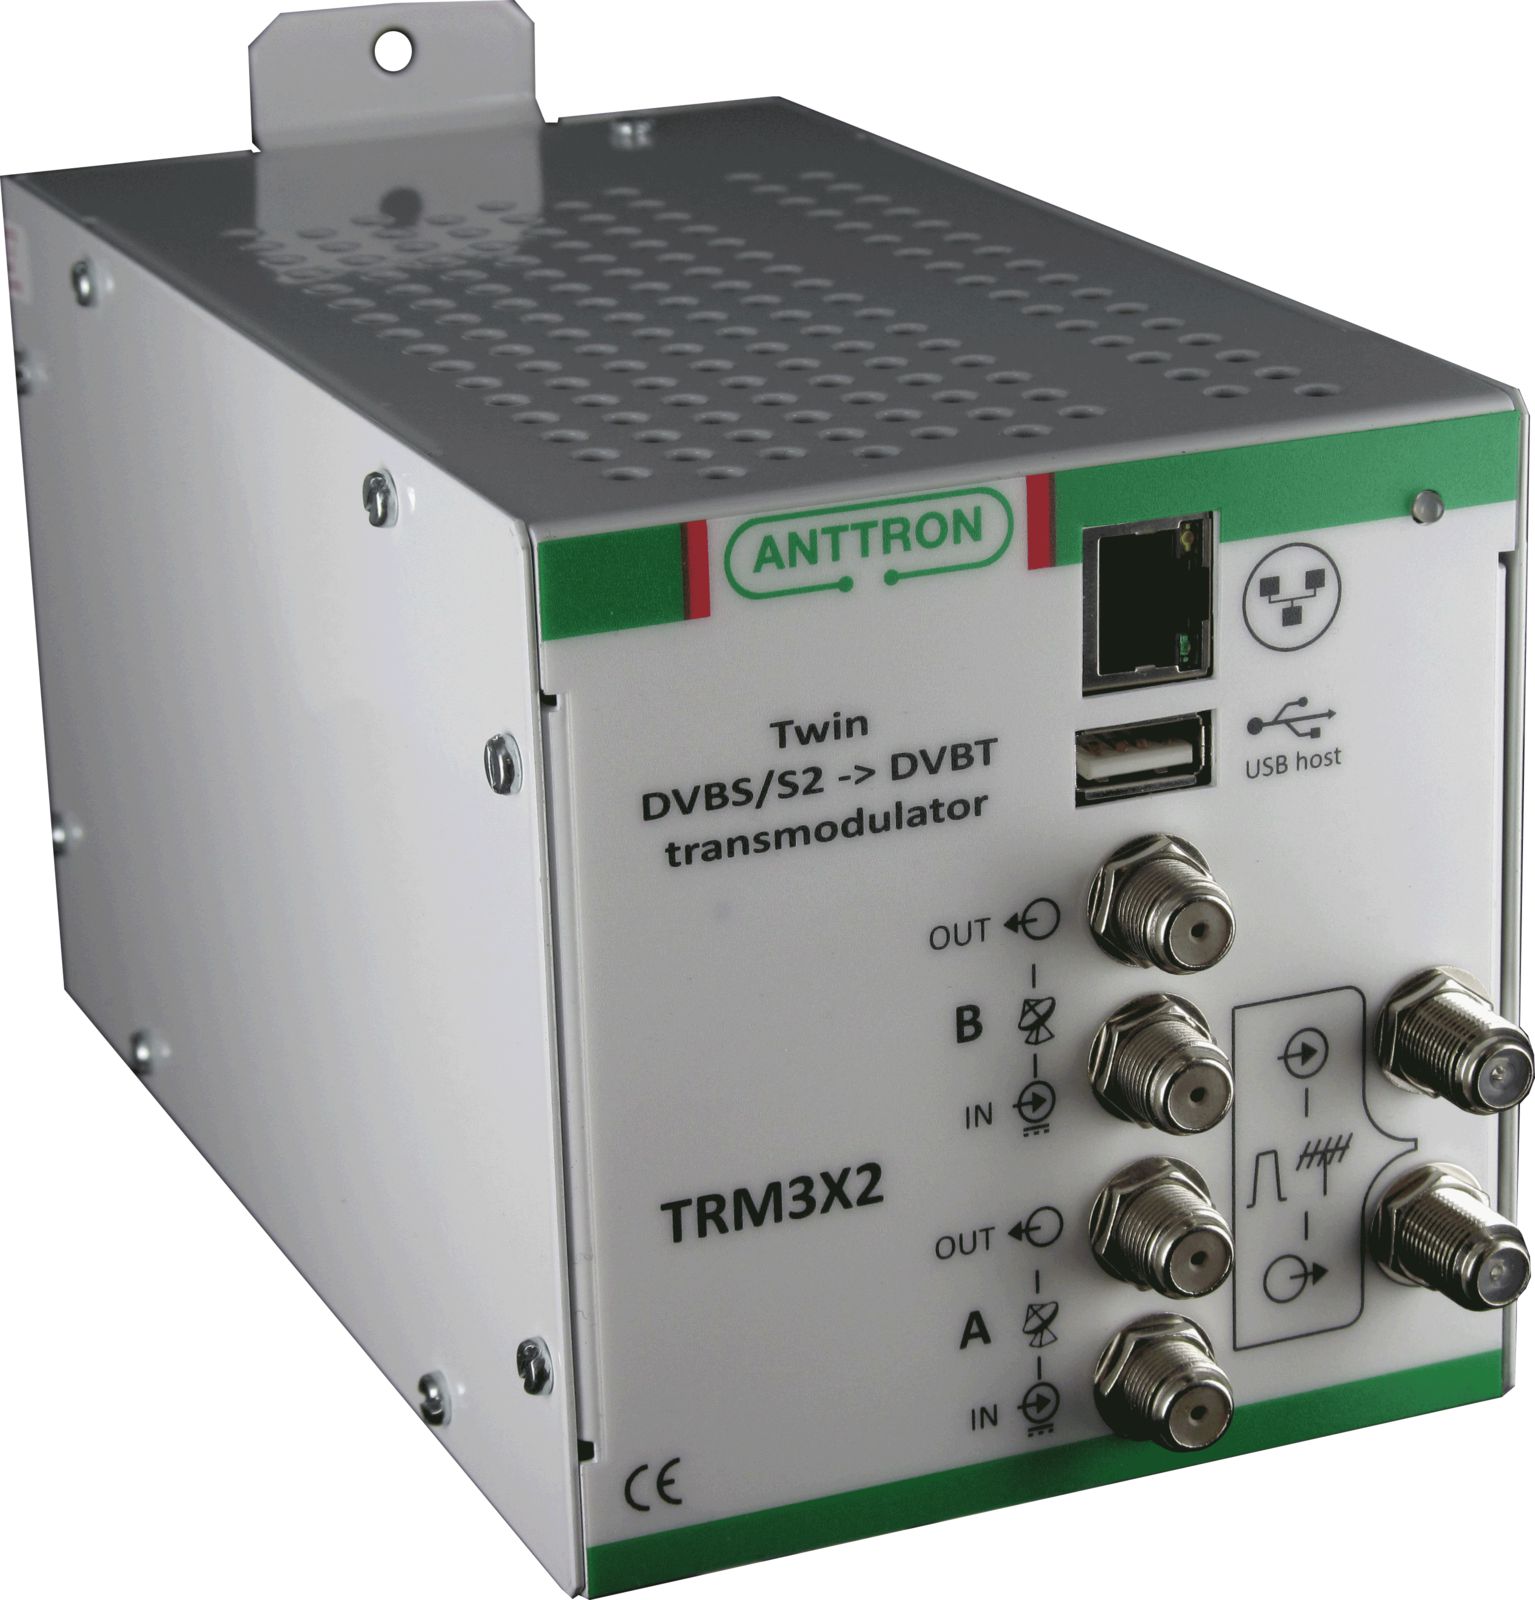 Anttron CRM3x2 Twin QPSK/DVB Twin QPSK/DVBC transmodulator